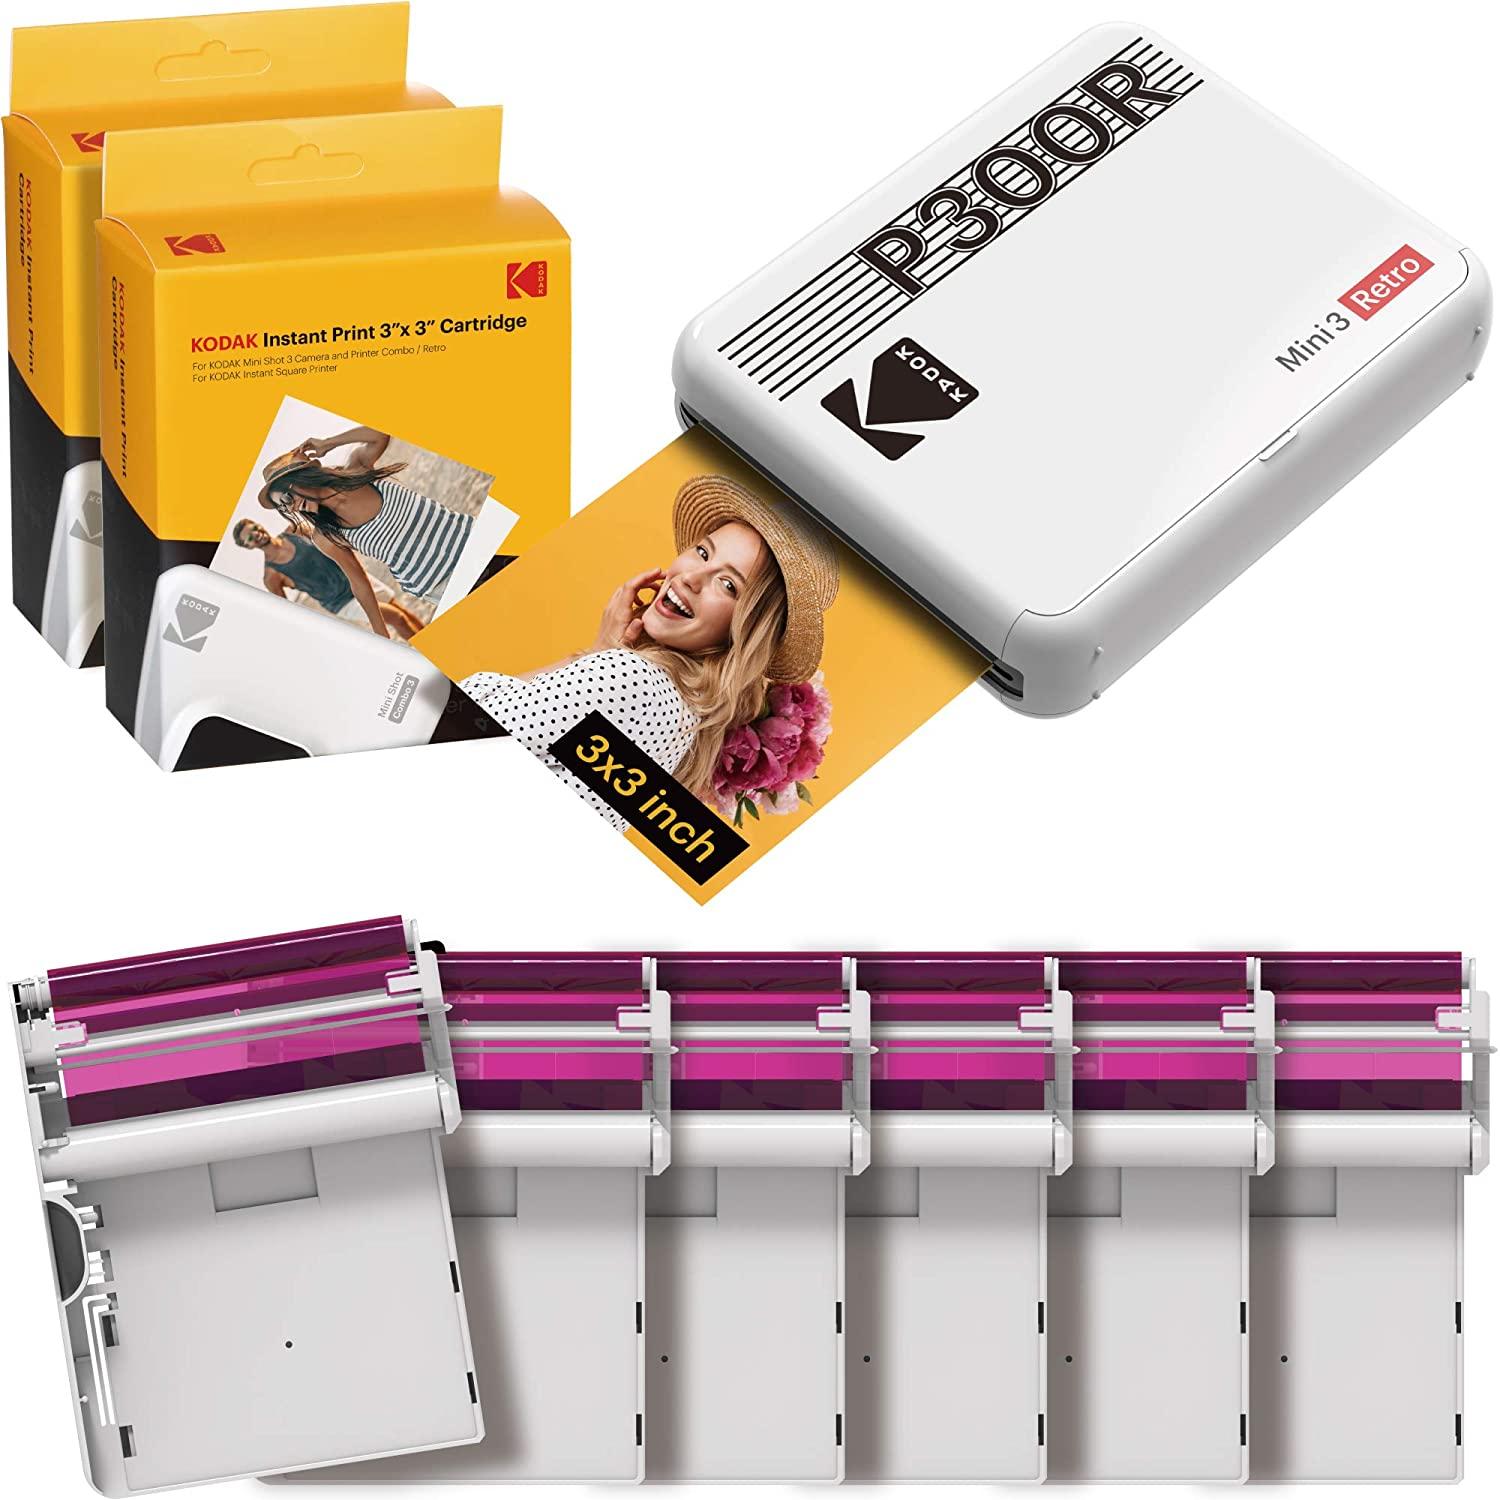 Kodak Mini 3 Retro Portable Photo Printer for $95.99 Shipped